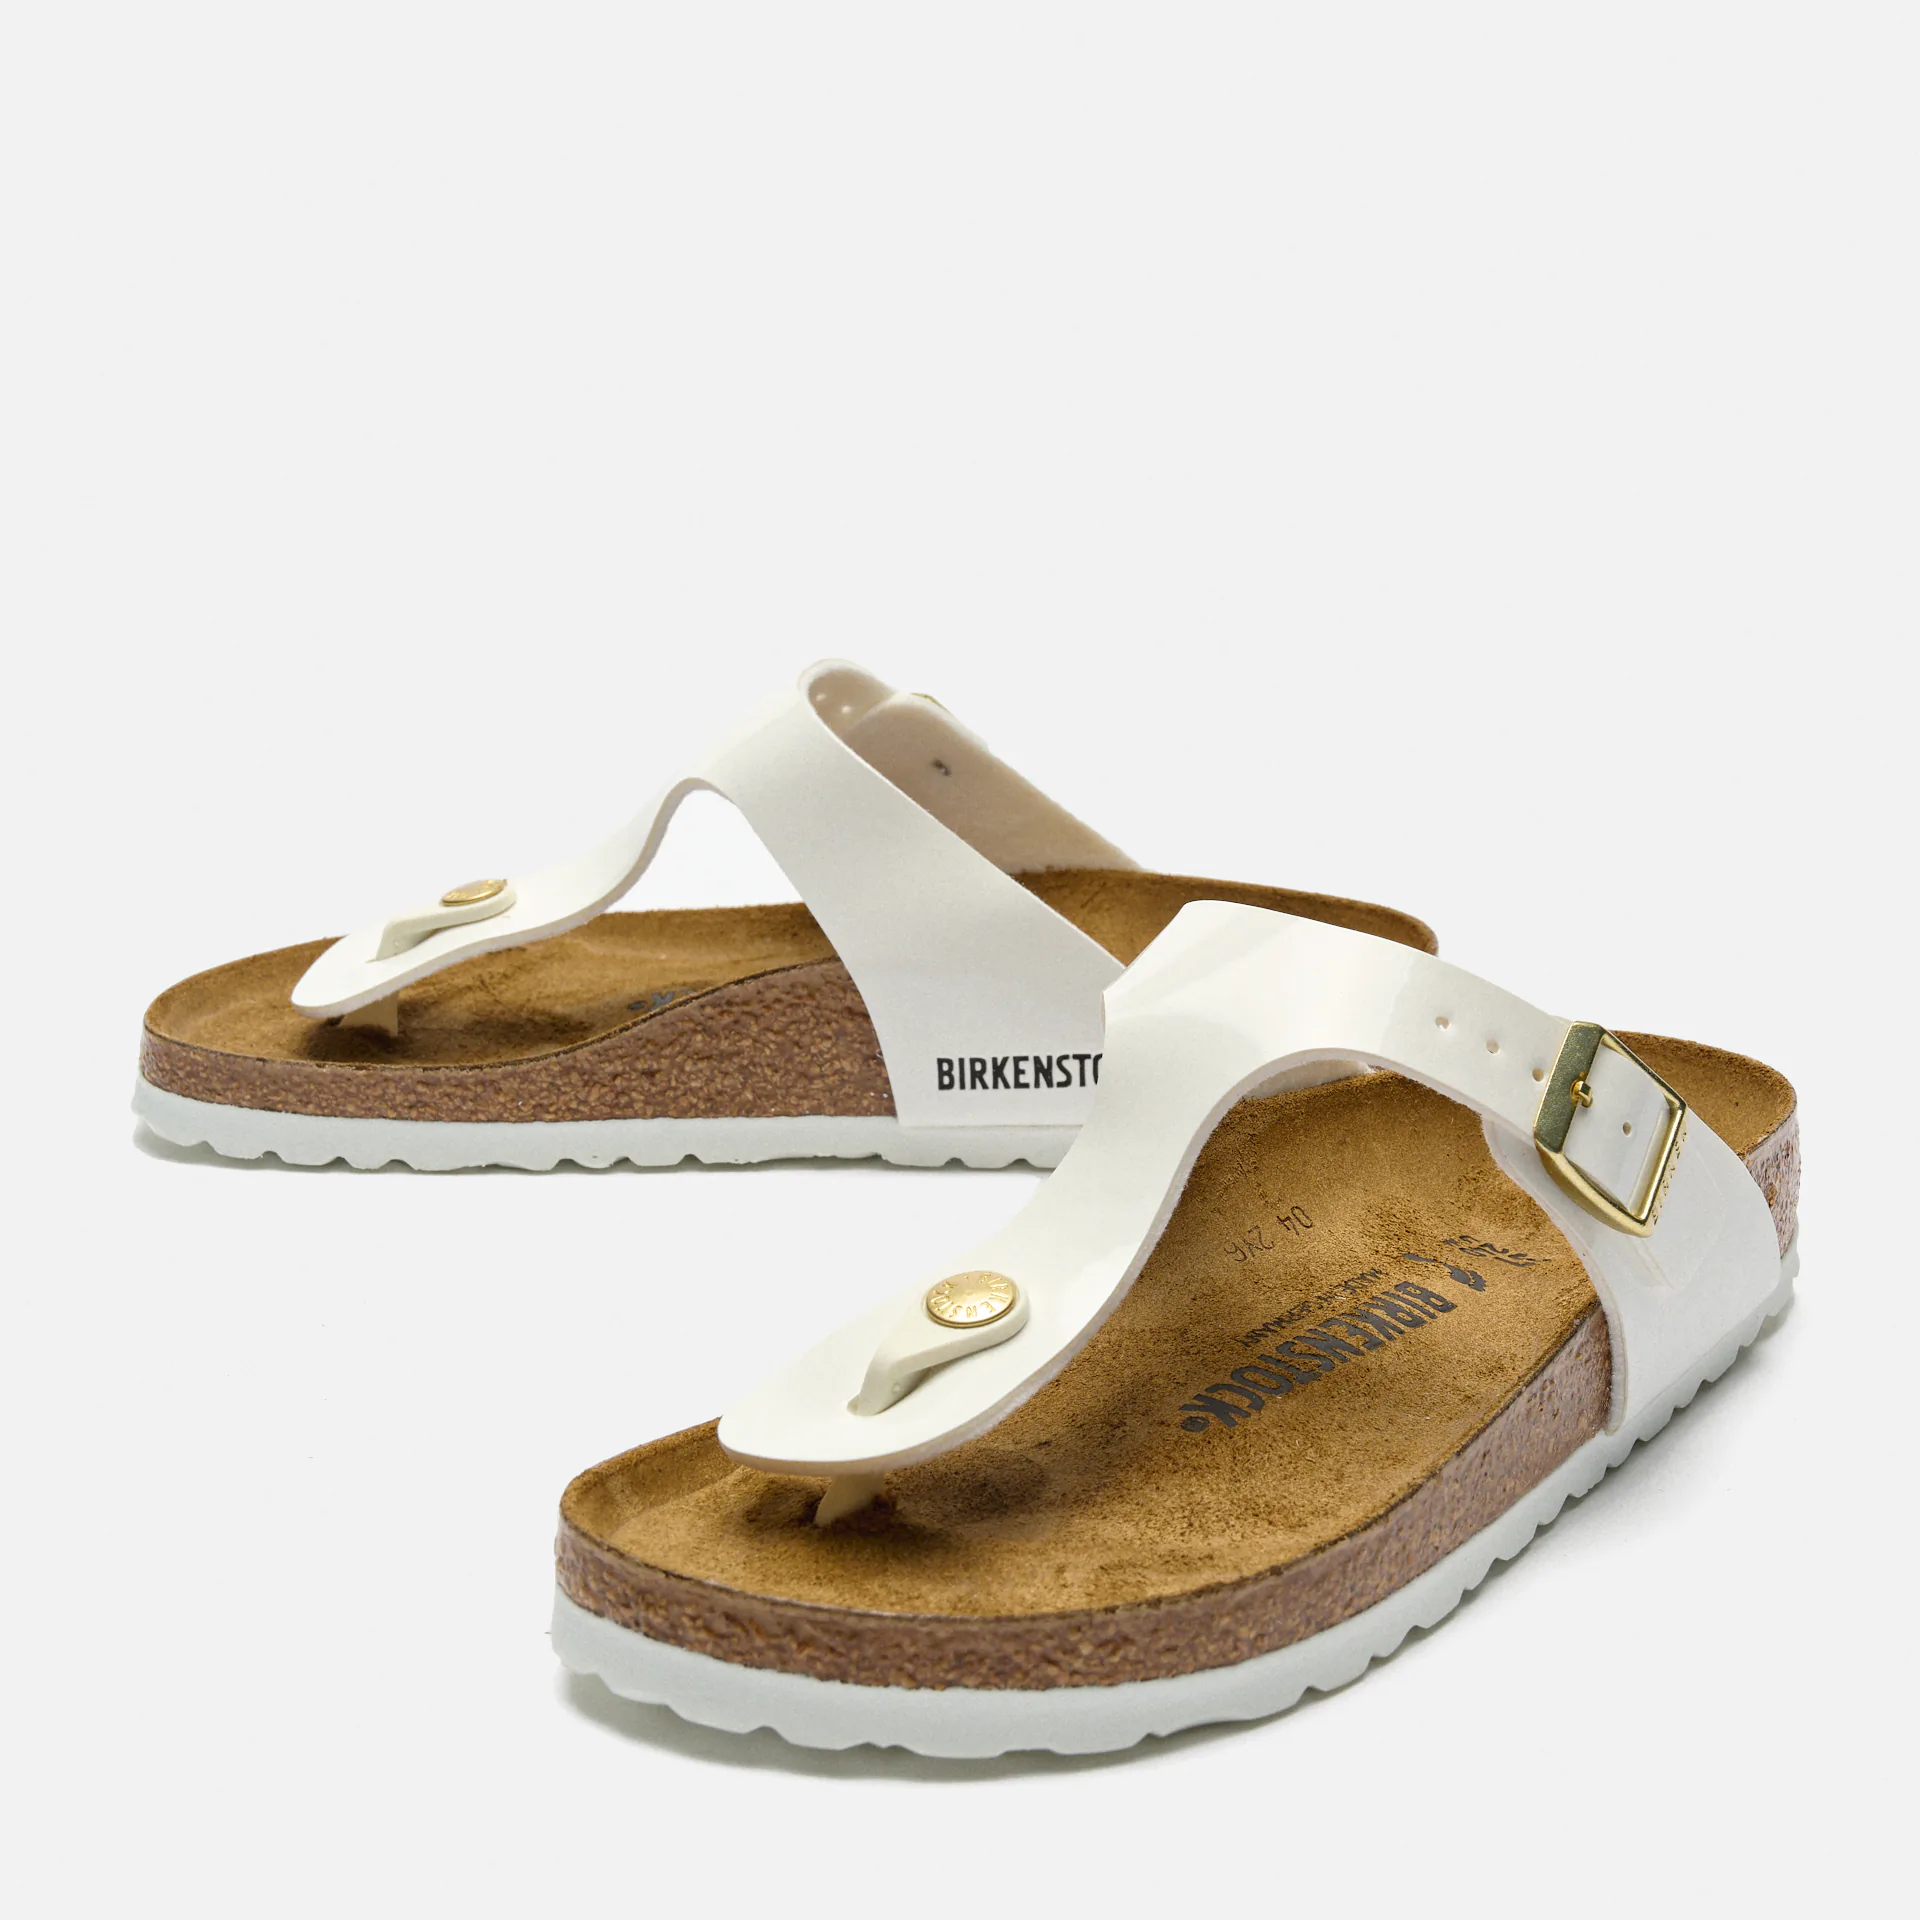 Birkenstock Gizeh Birko-Flor Sandals Patent White